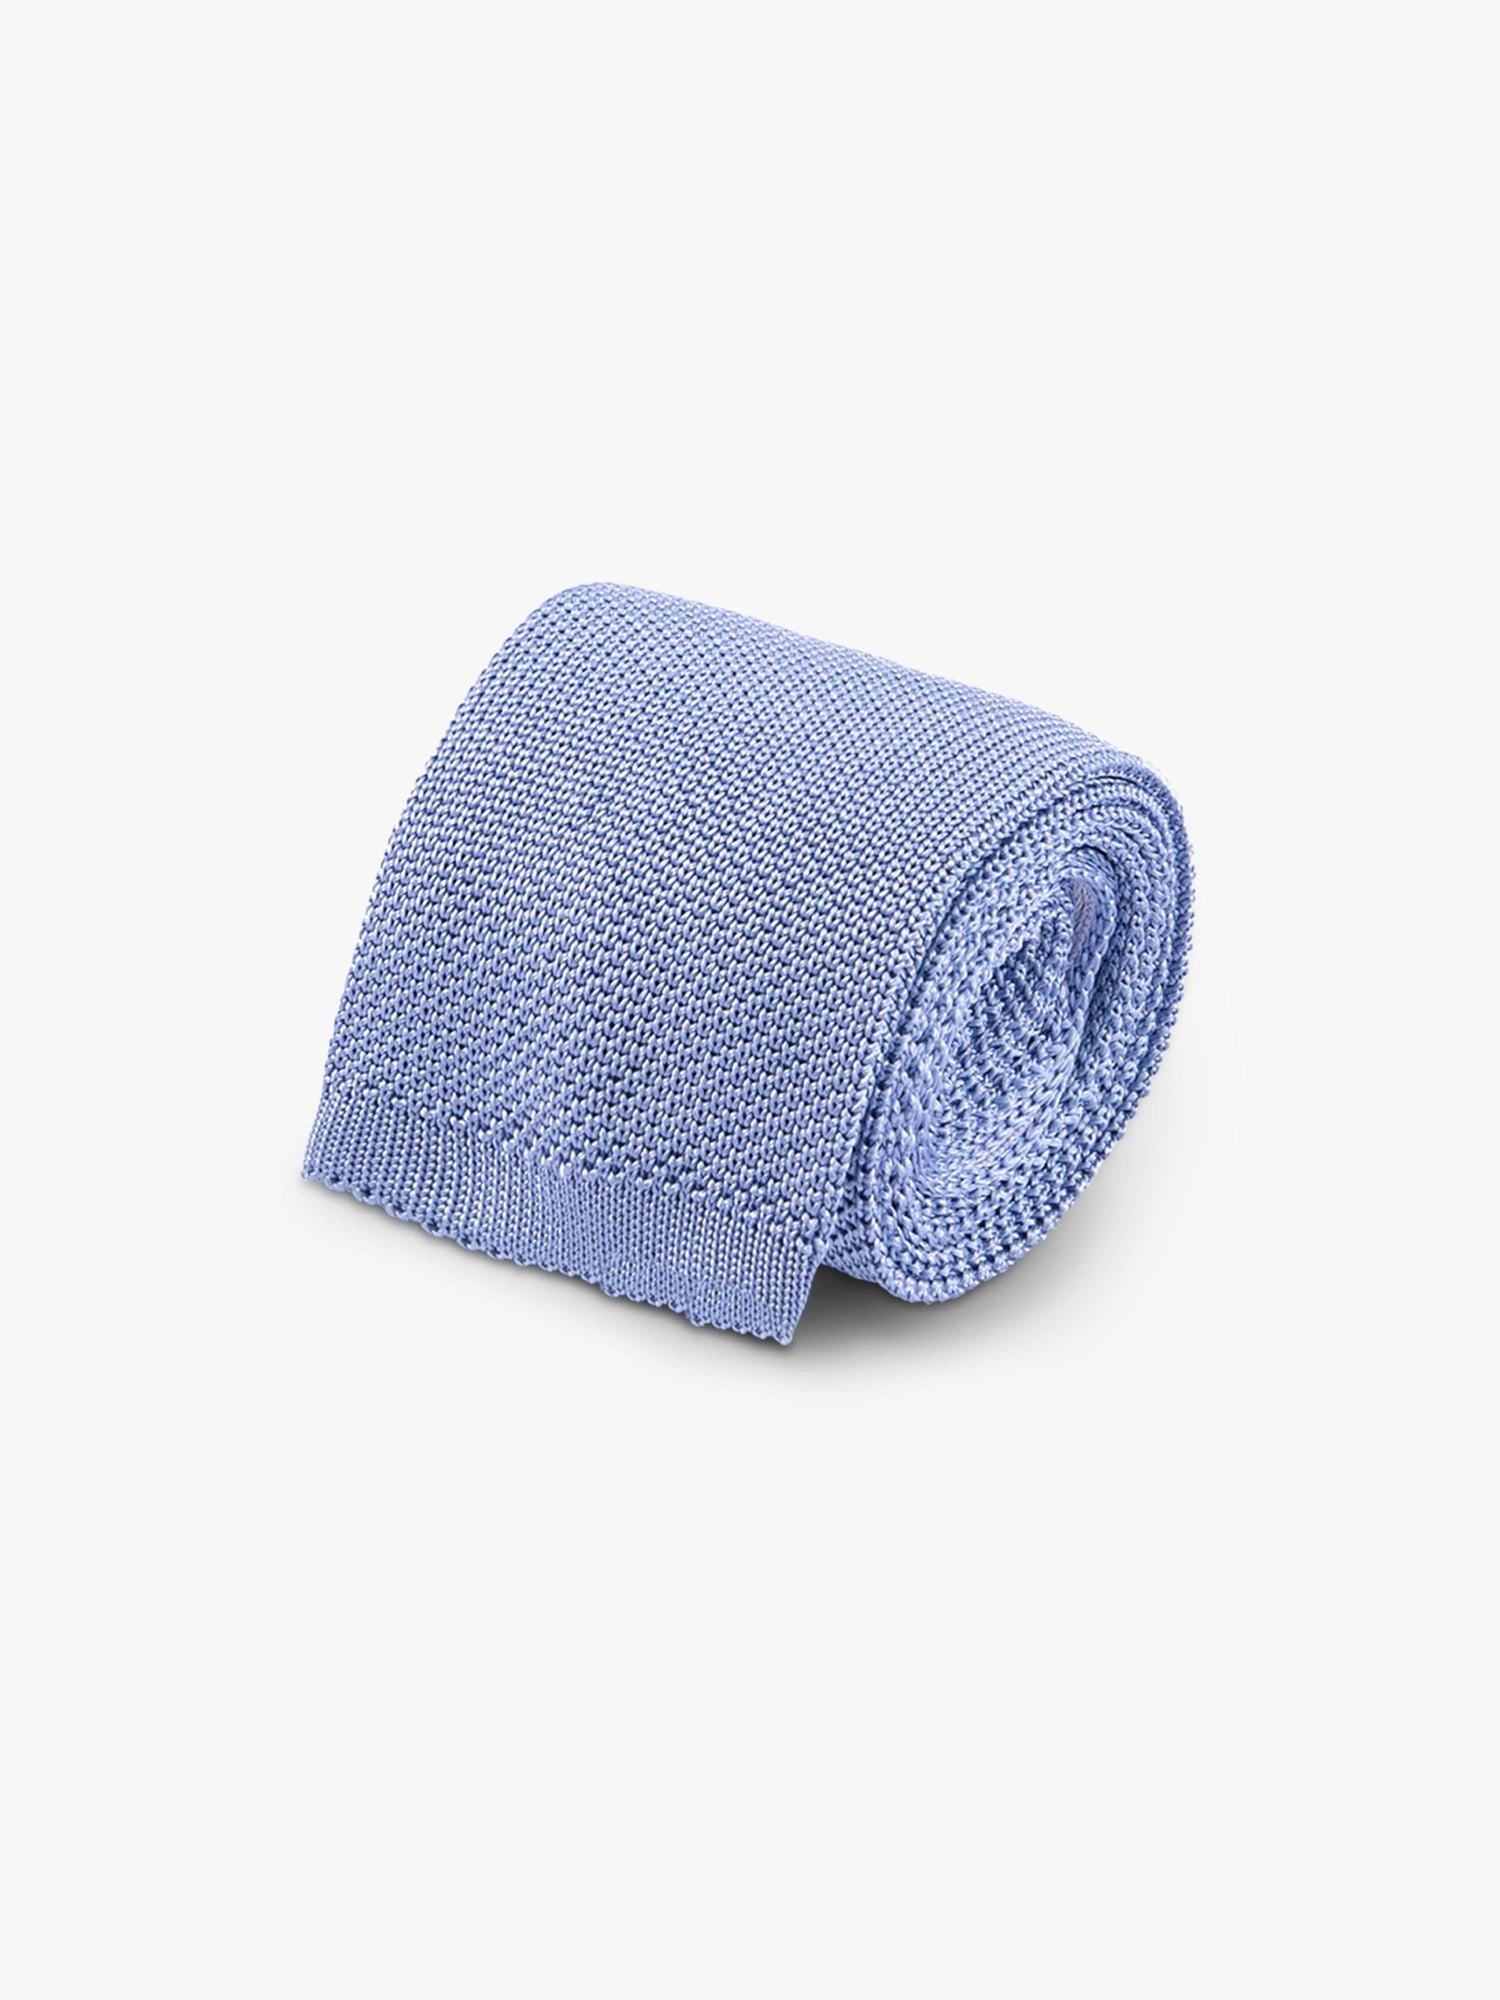 Sky Blue Knit Tie - Grand Le Mar